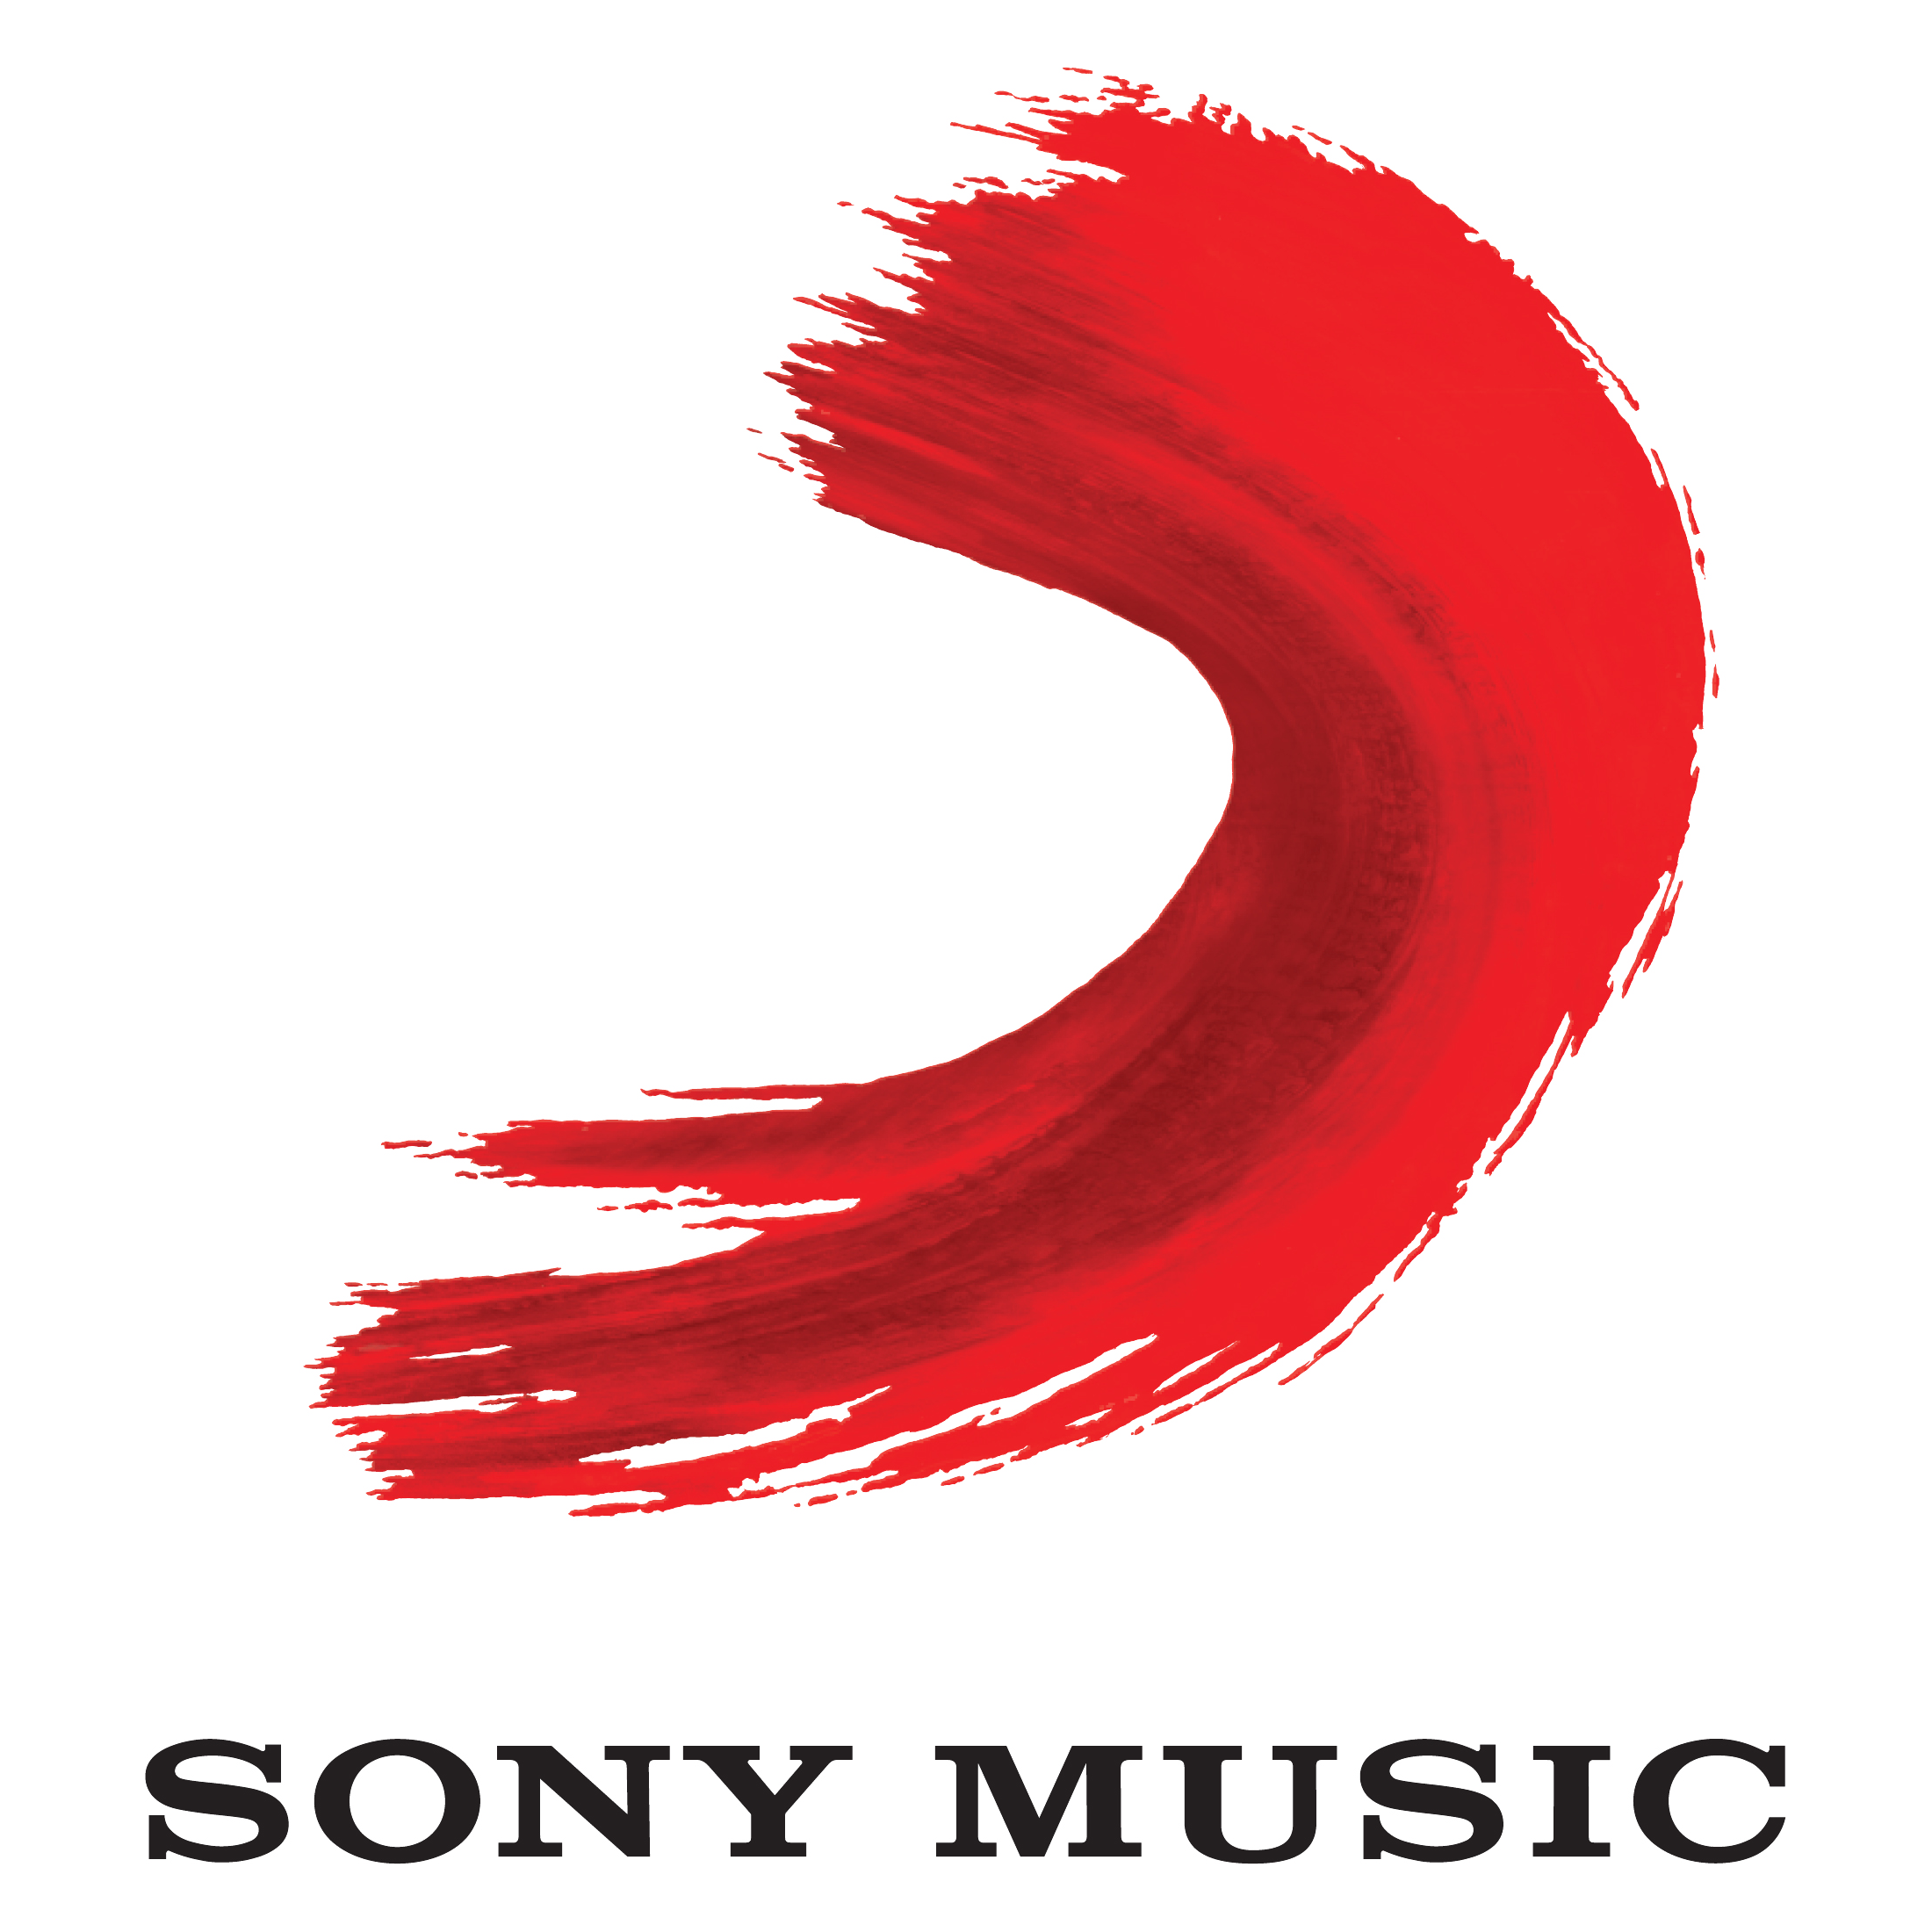 Sony-Music-logo-wordmark.png